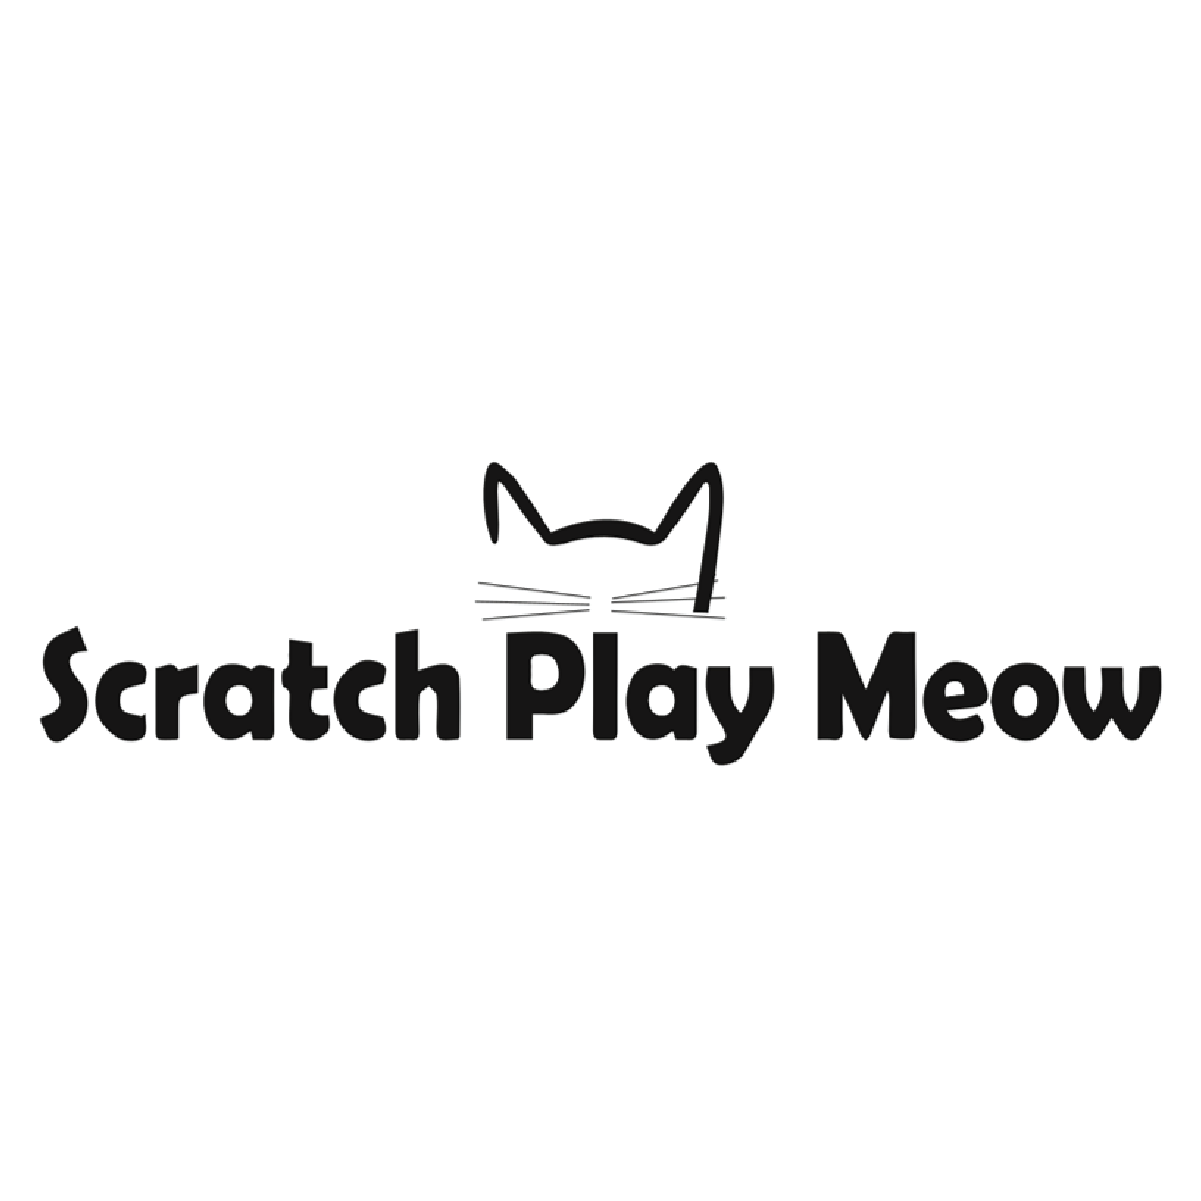 Scratch Play Meow logo